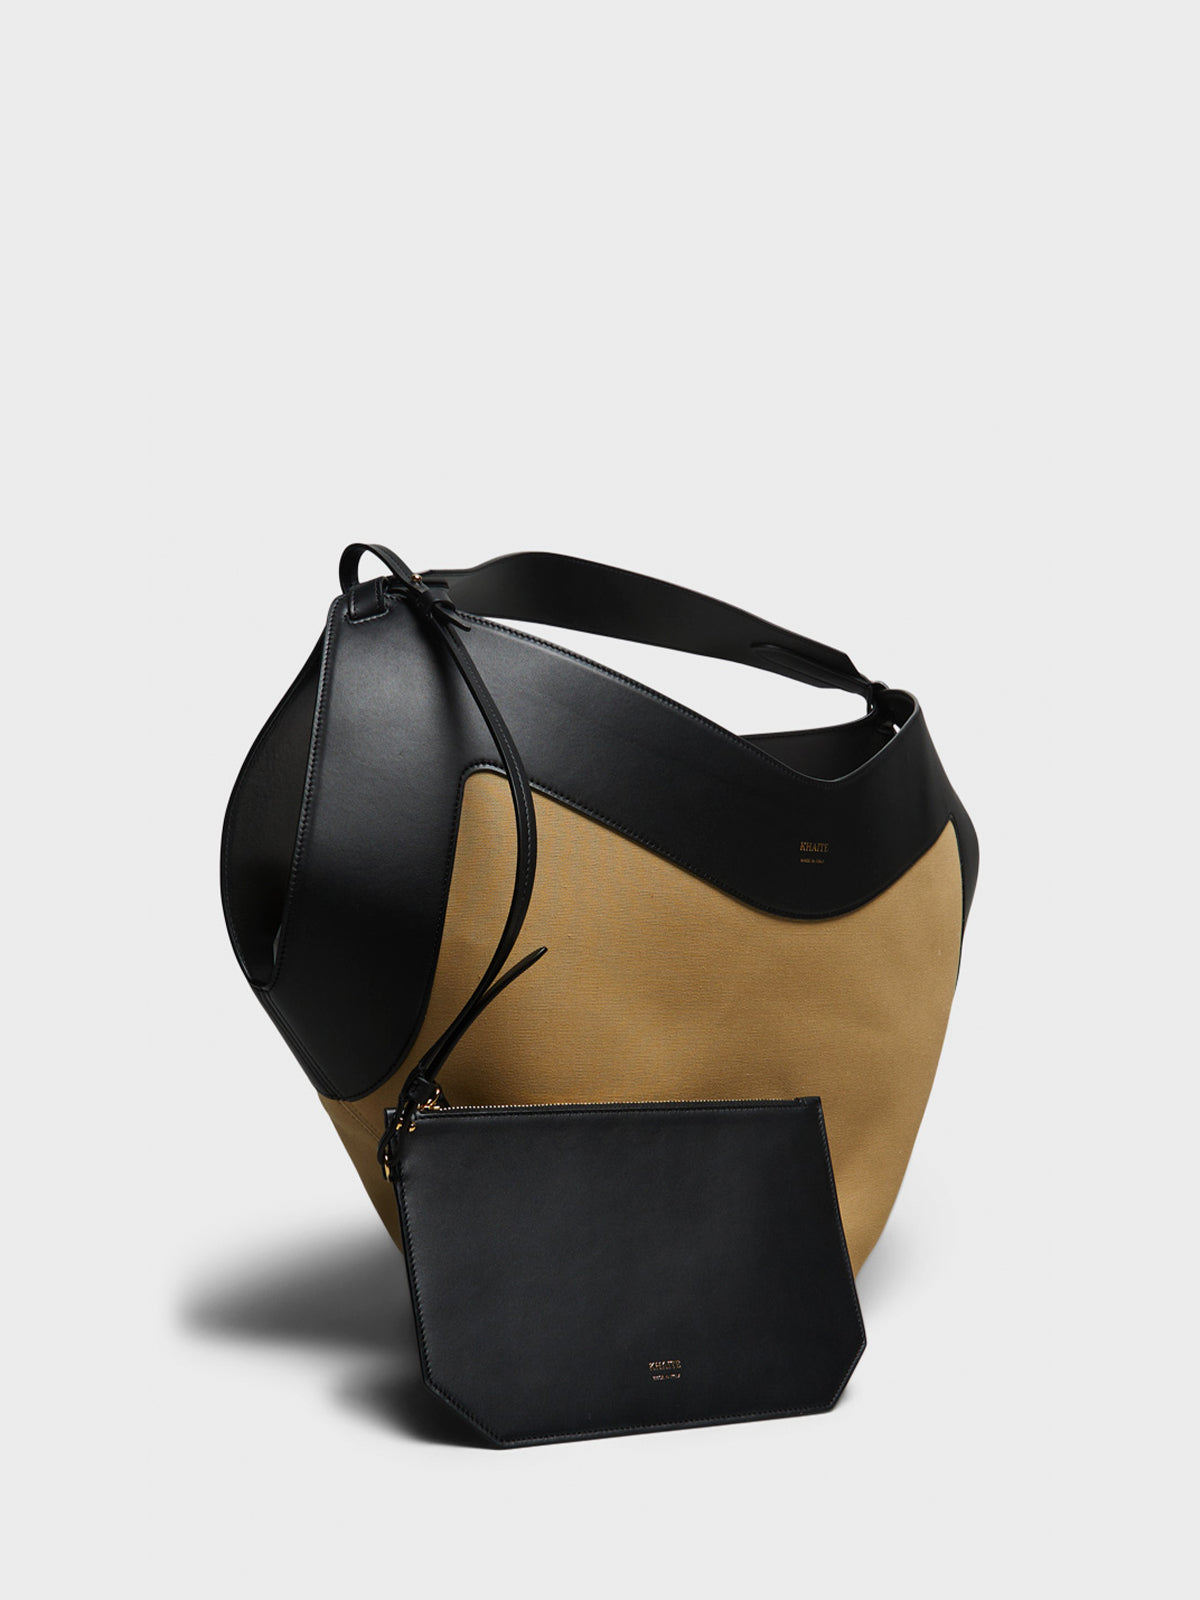 Lotus Medium Canvas Tote Bag in Black and Beige